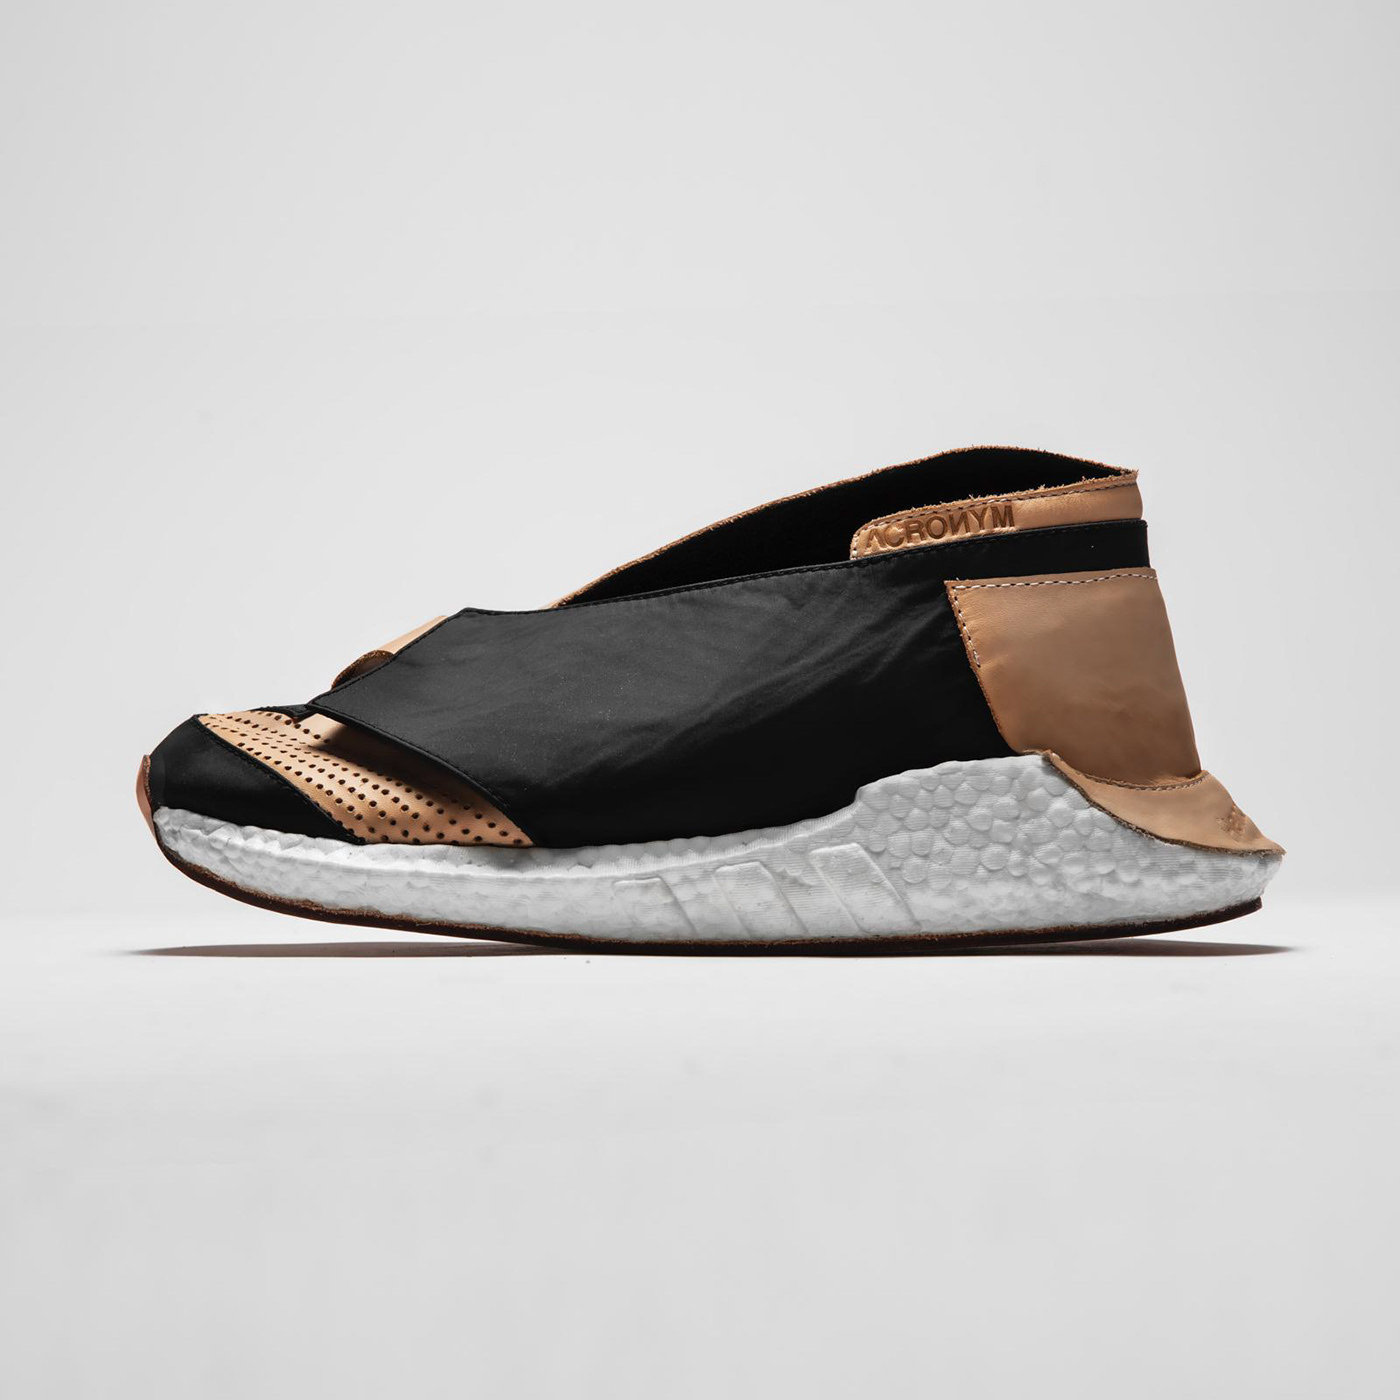 footwear shoes adidas Acronym conceptkicks leather scheme